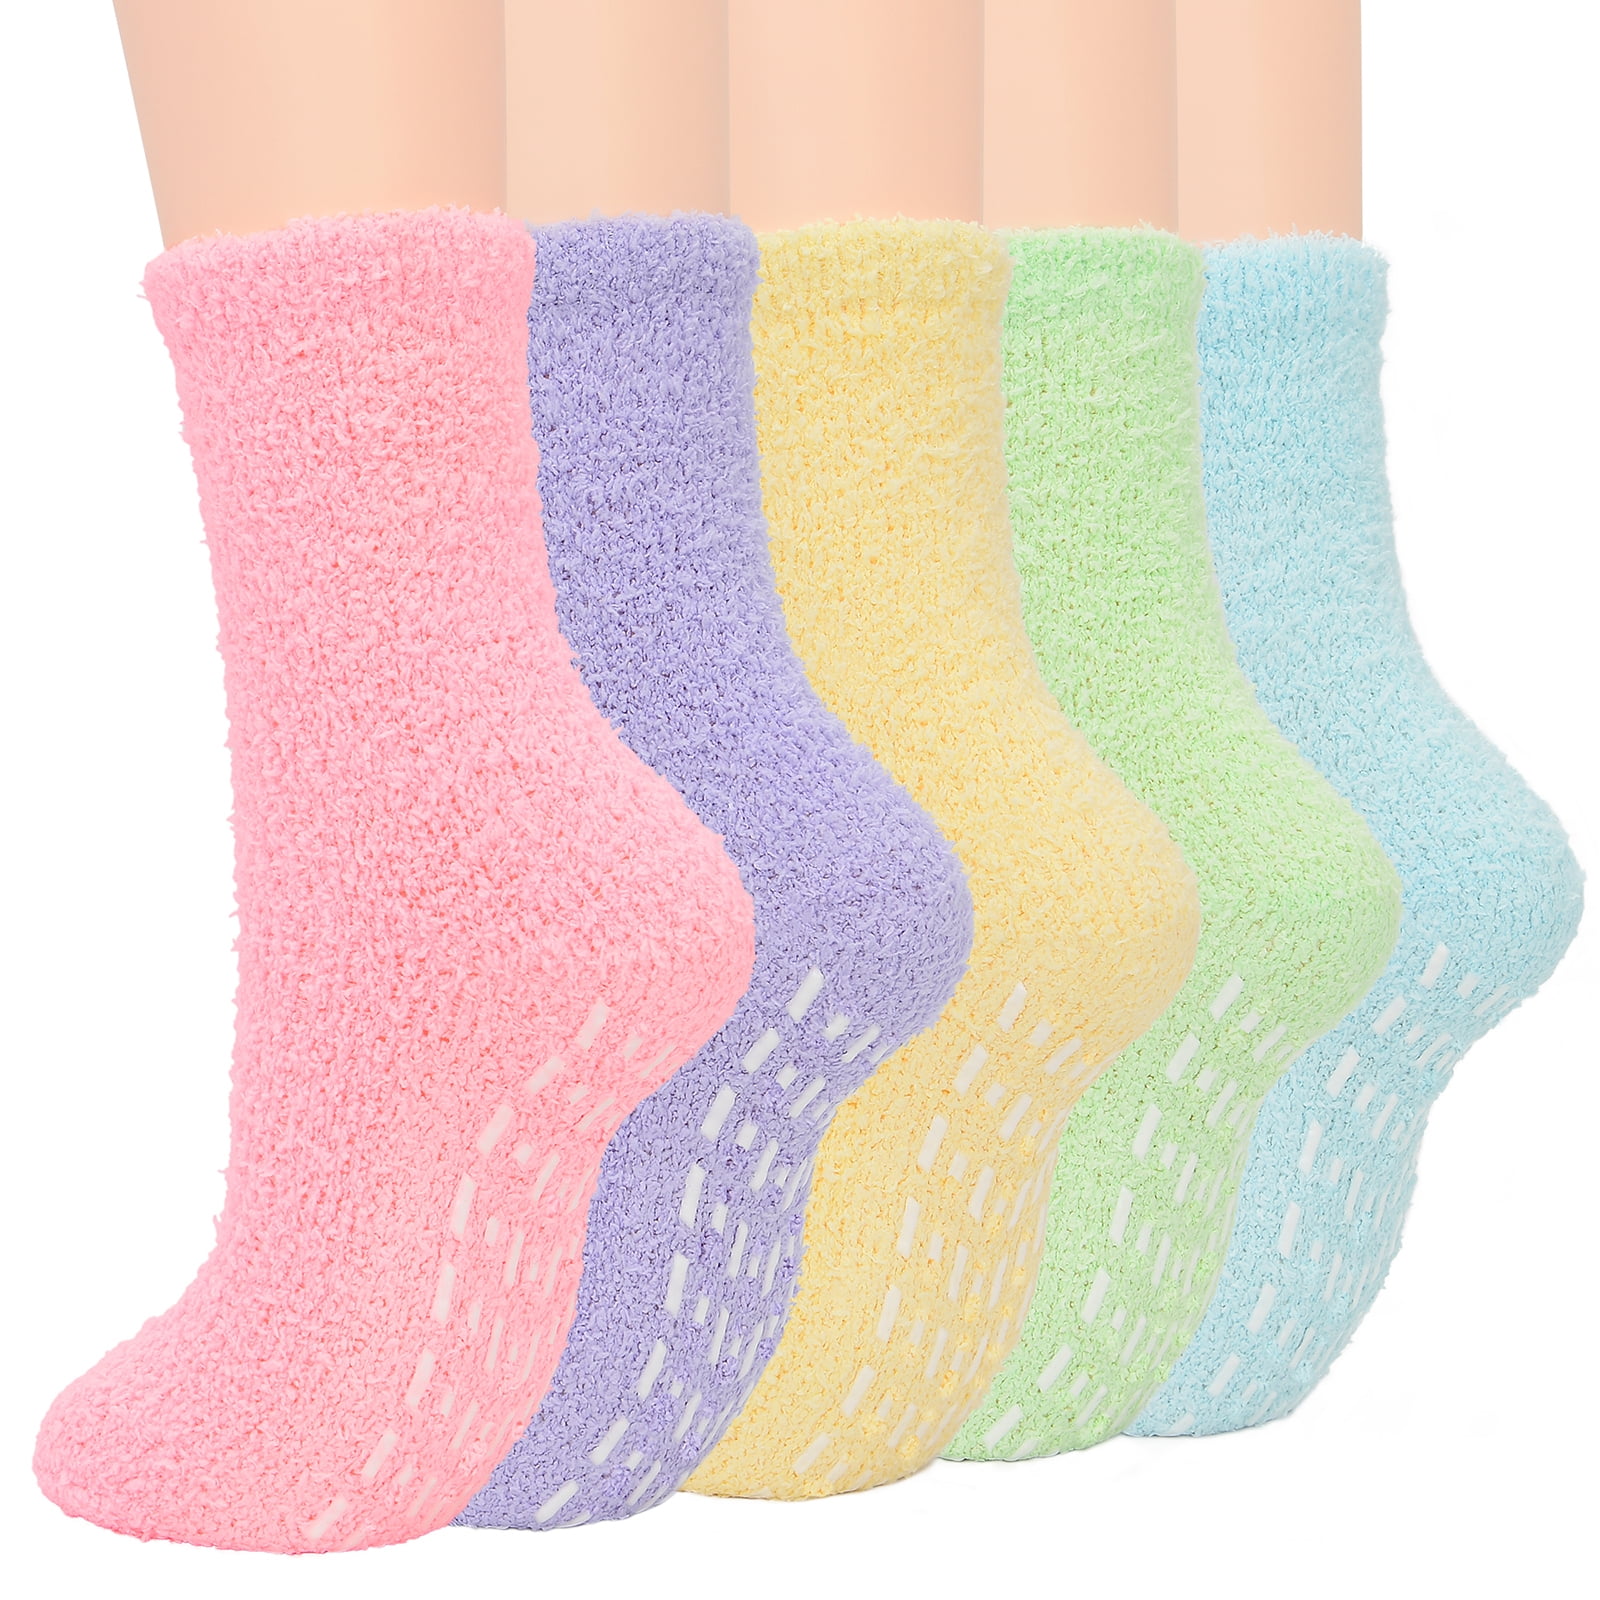 American Trends Women Warm Super Soft Cozy Fuzzy Socks Fluffy socks Slipper  Socks for Women with Grippers Non Slip Sleeping Socks 5 Pack Solid Rainbow